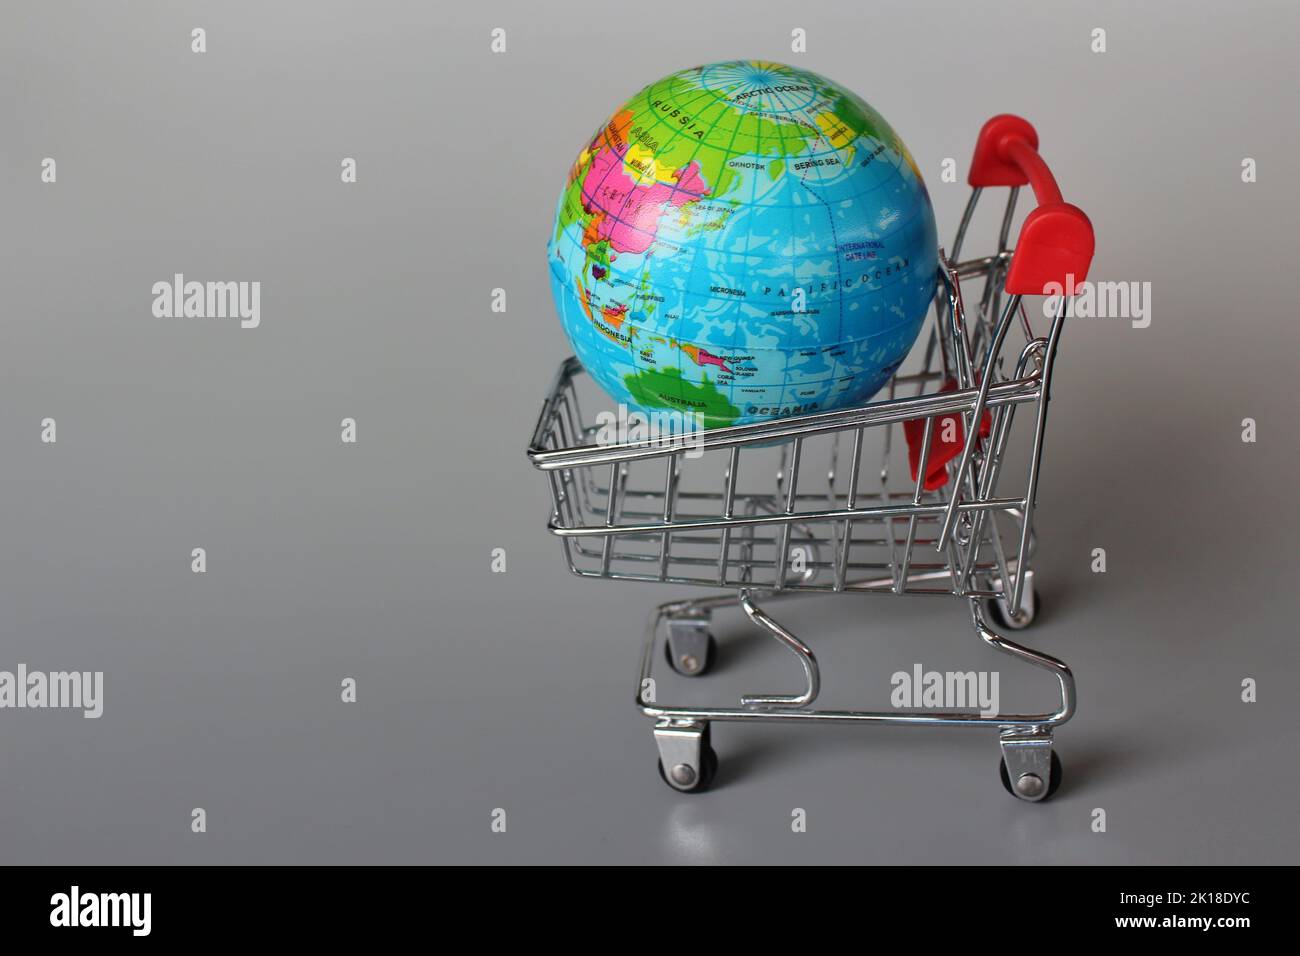 Global market, international market concept. Mini shopping trolley and globe on grey background Stock Photo